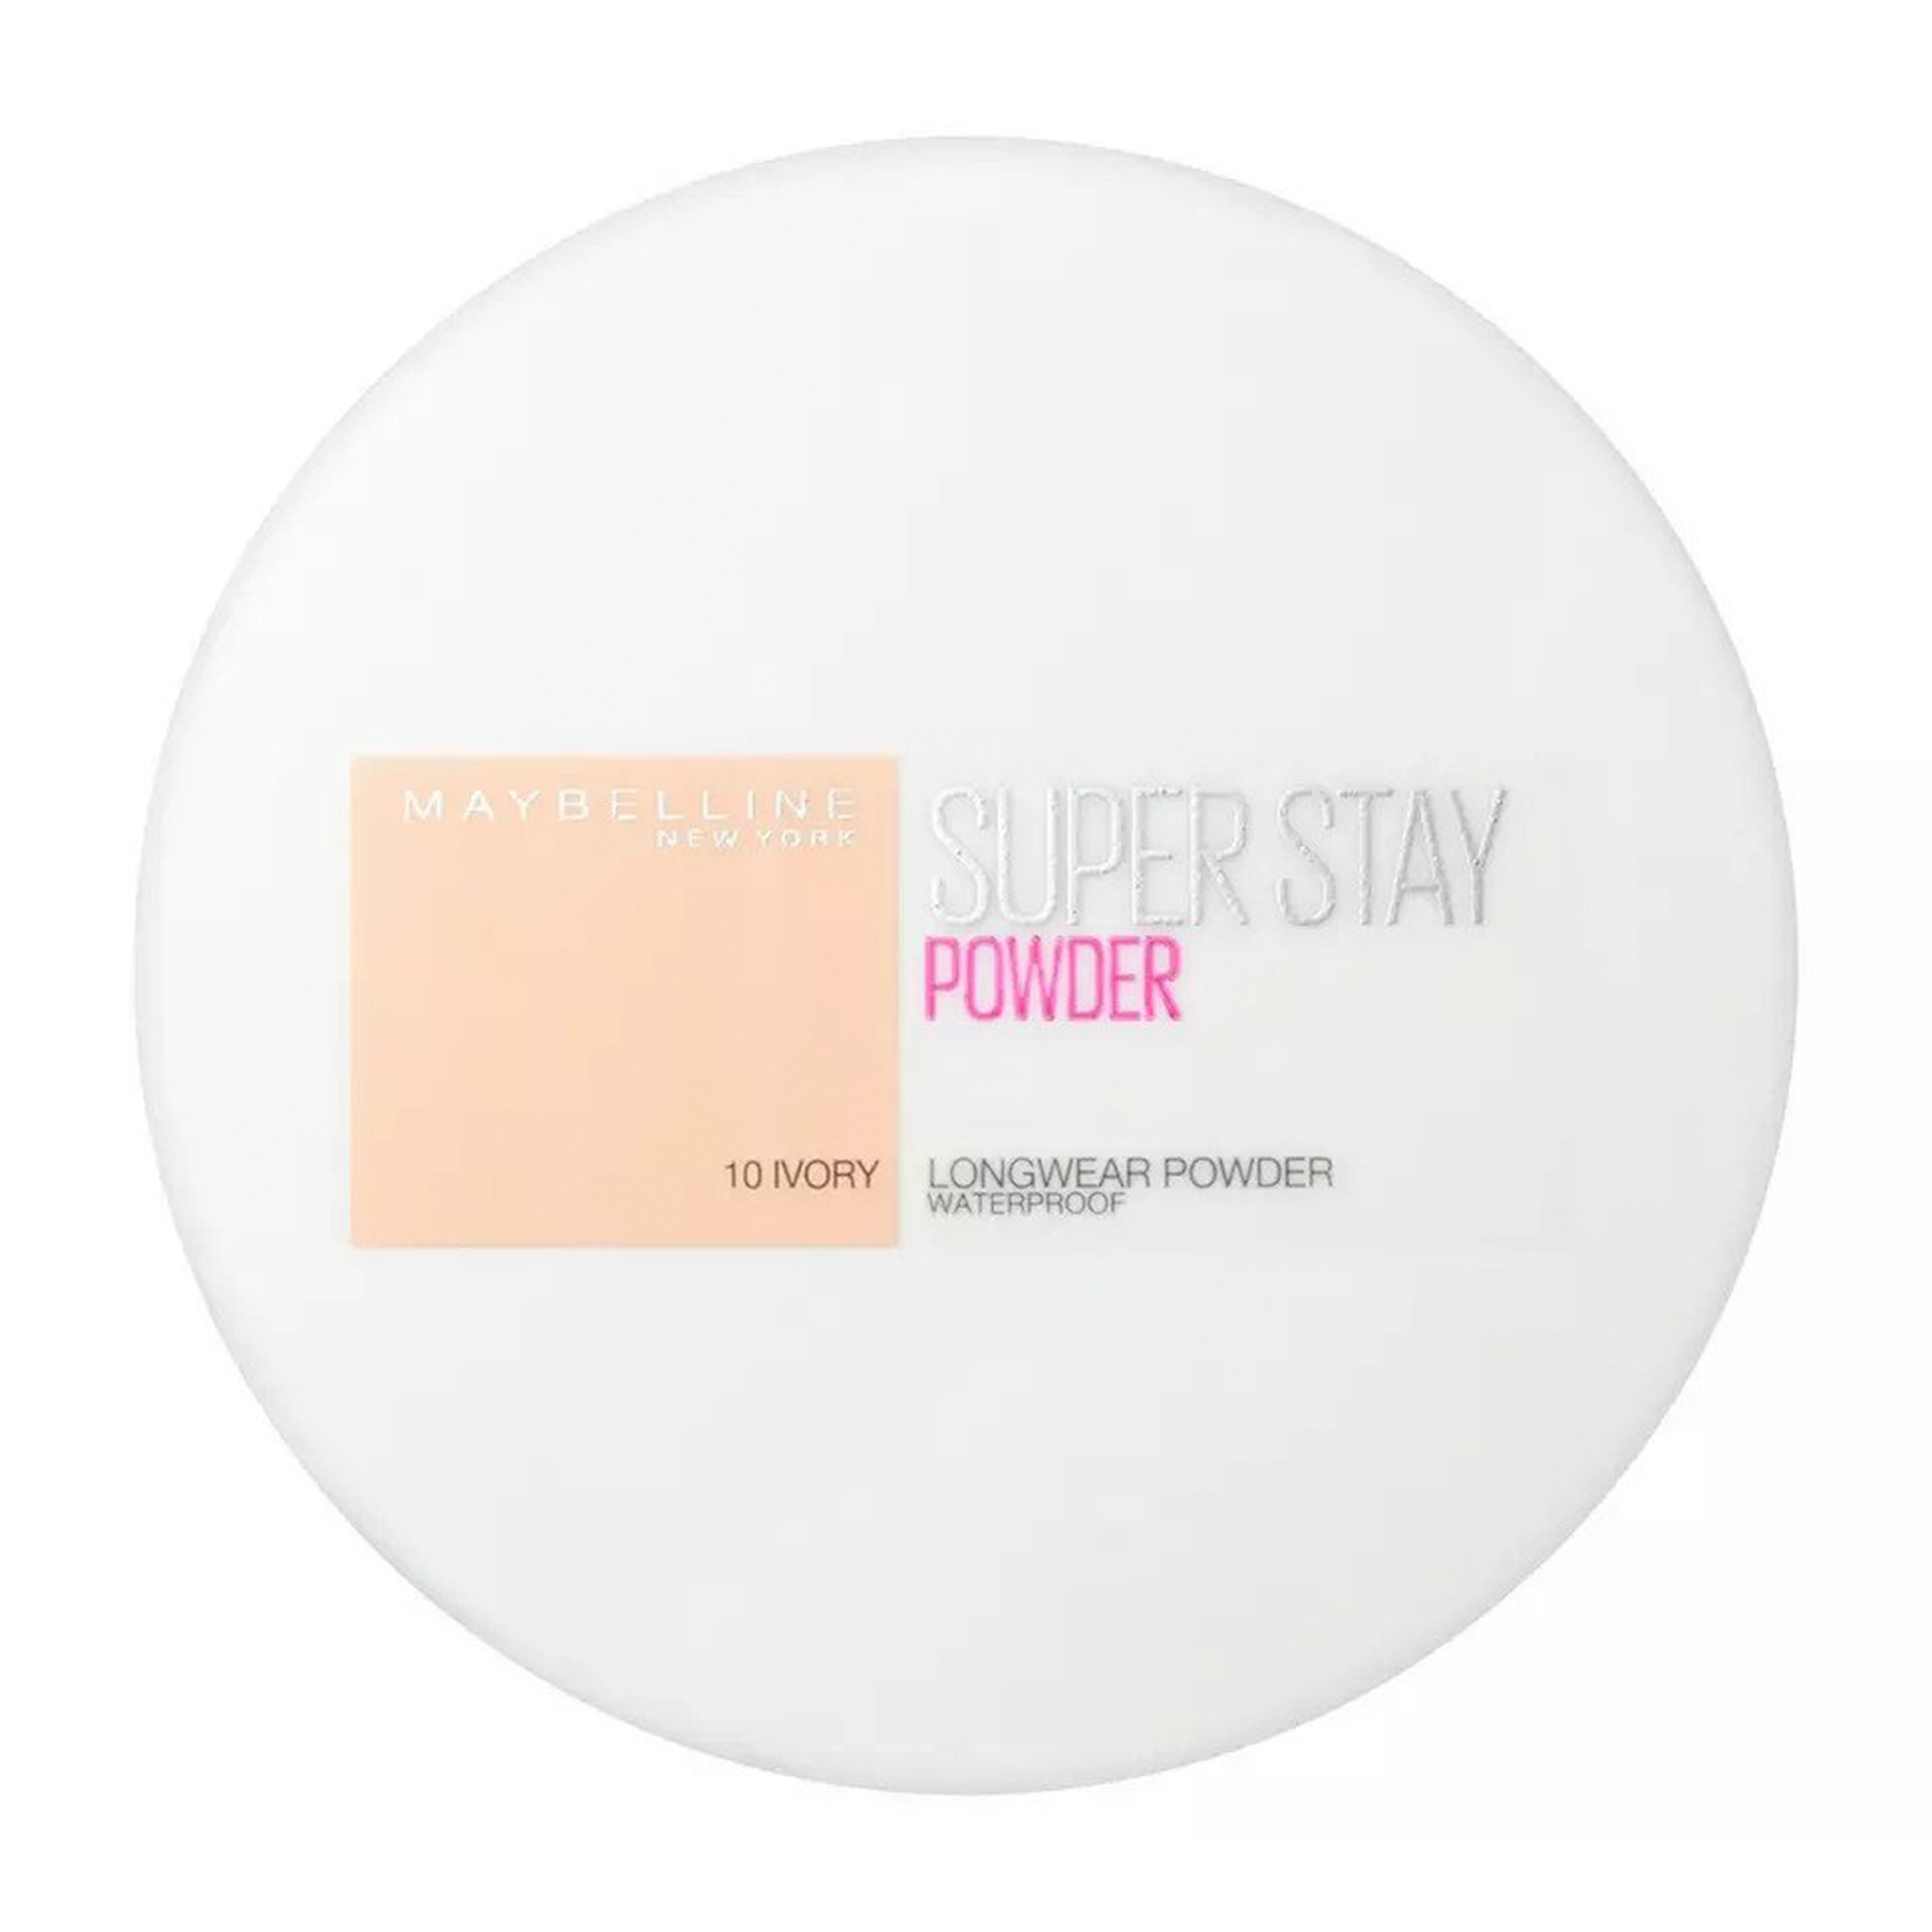 [B-GRADE] Maybelline Super Stay Powder - 10 Ivory